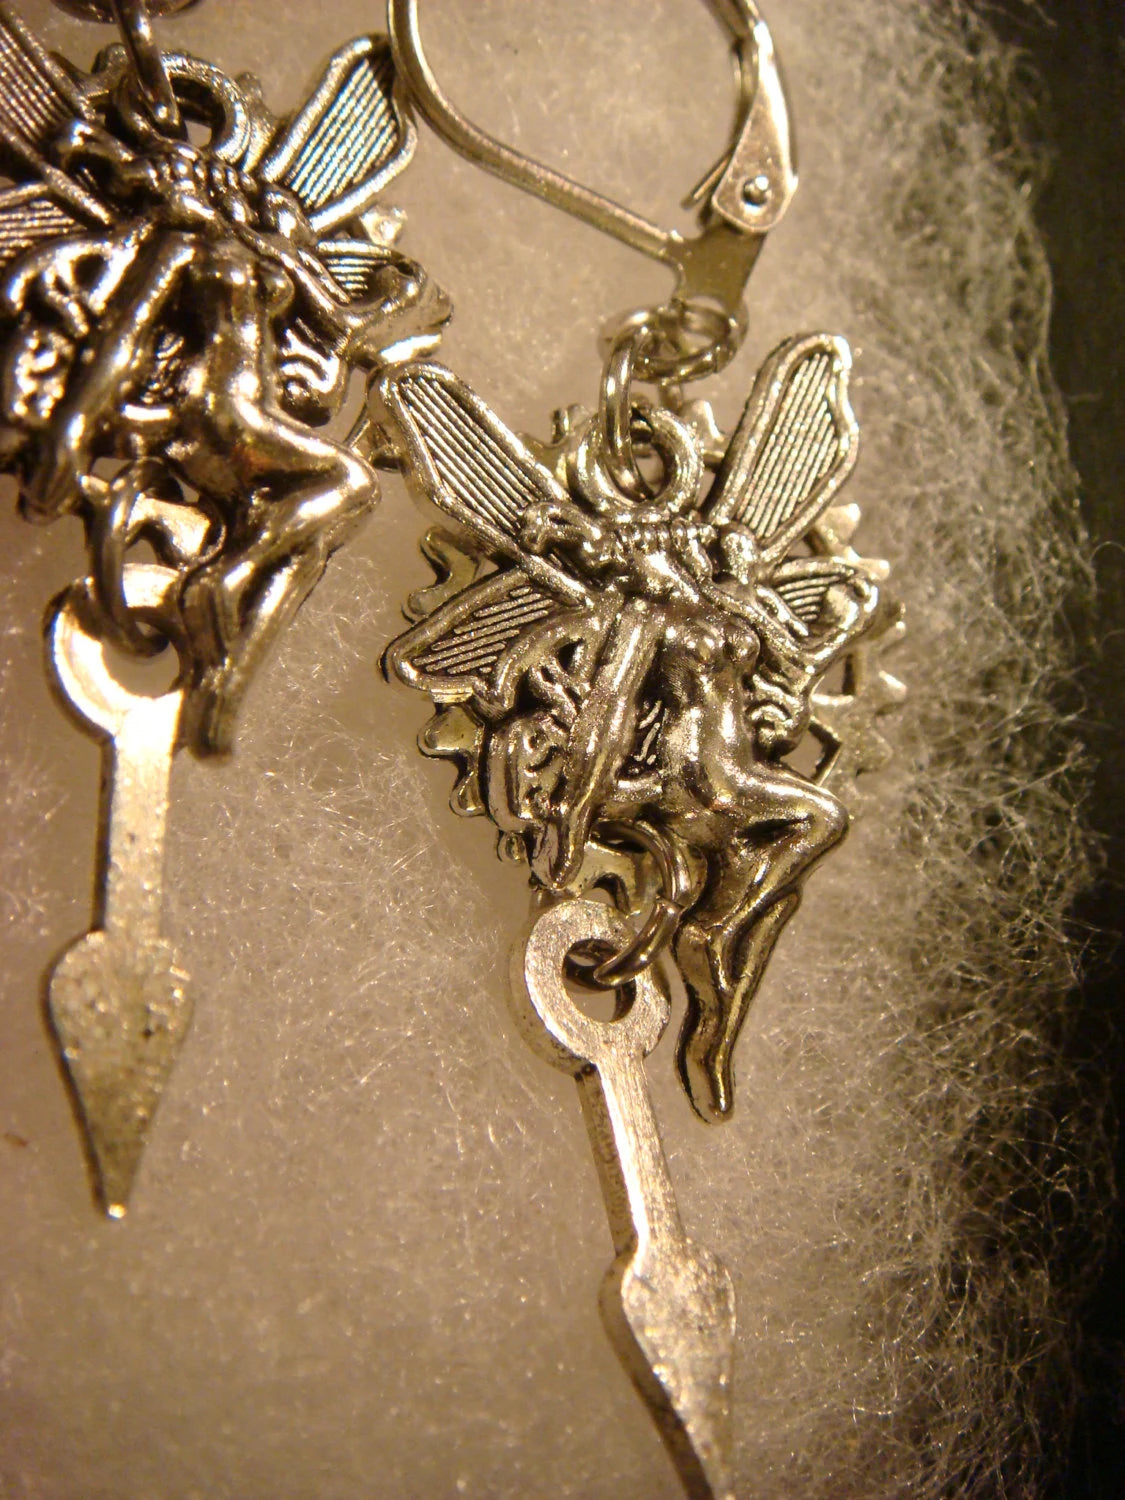 Fairy and Gear Dangle Earrings in Antique Silver